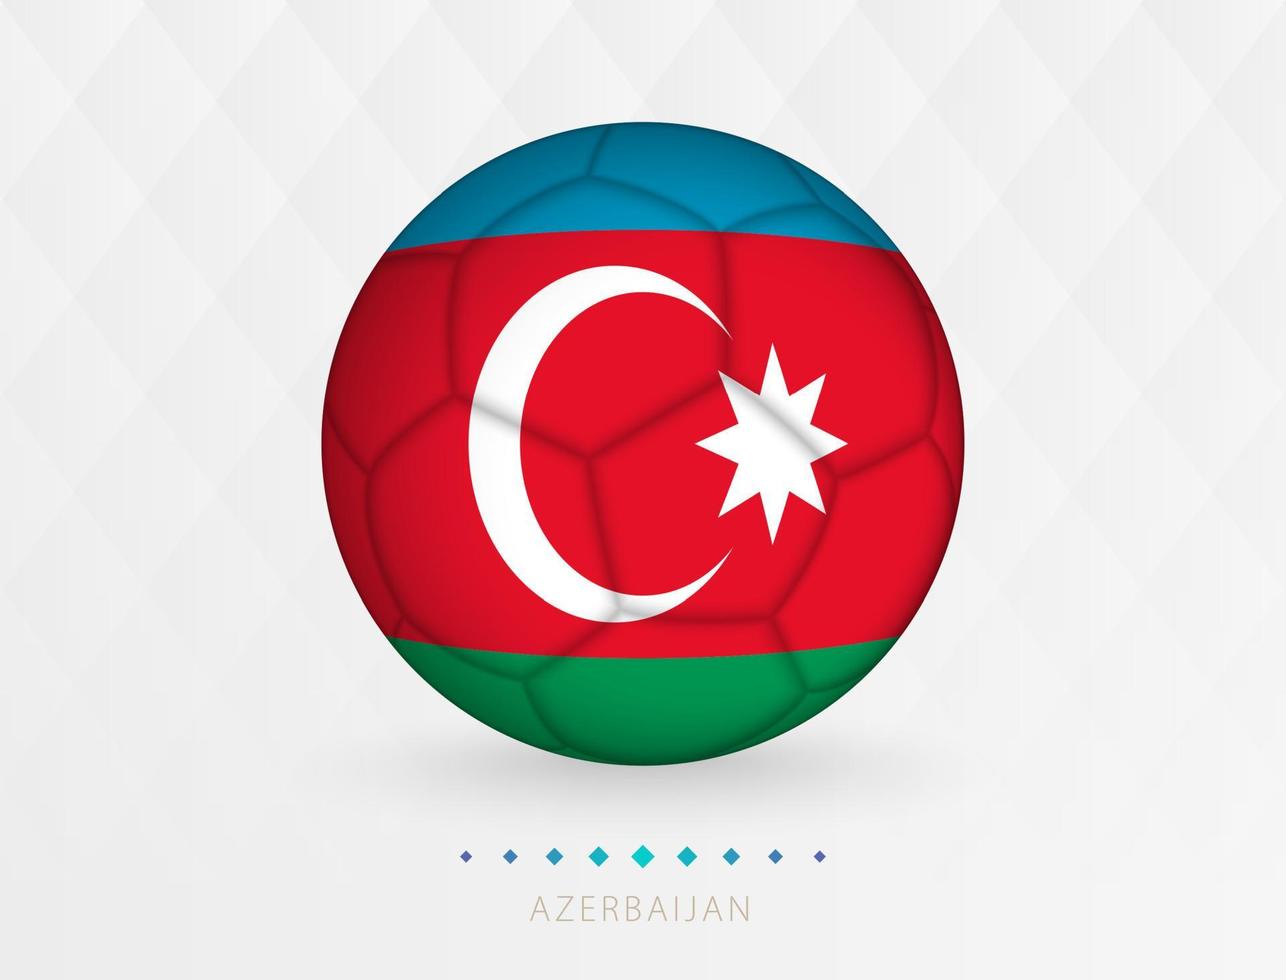 ballon de football avec motif drapeau azerbaïdjanais, ballon de football avec drapeau de l'équipe nationale azerbaïdjanaise. vecteur